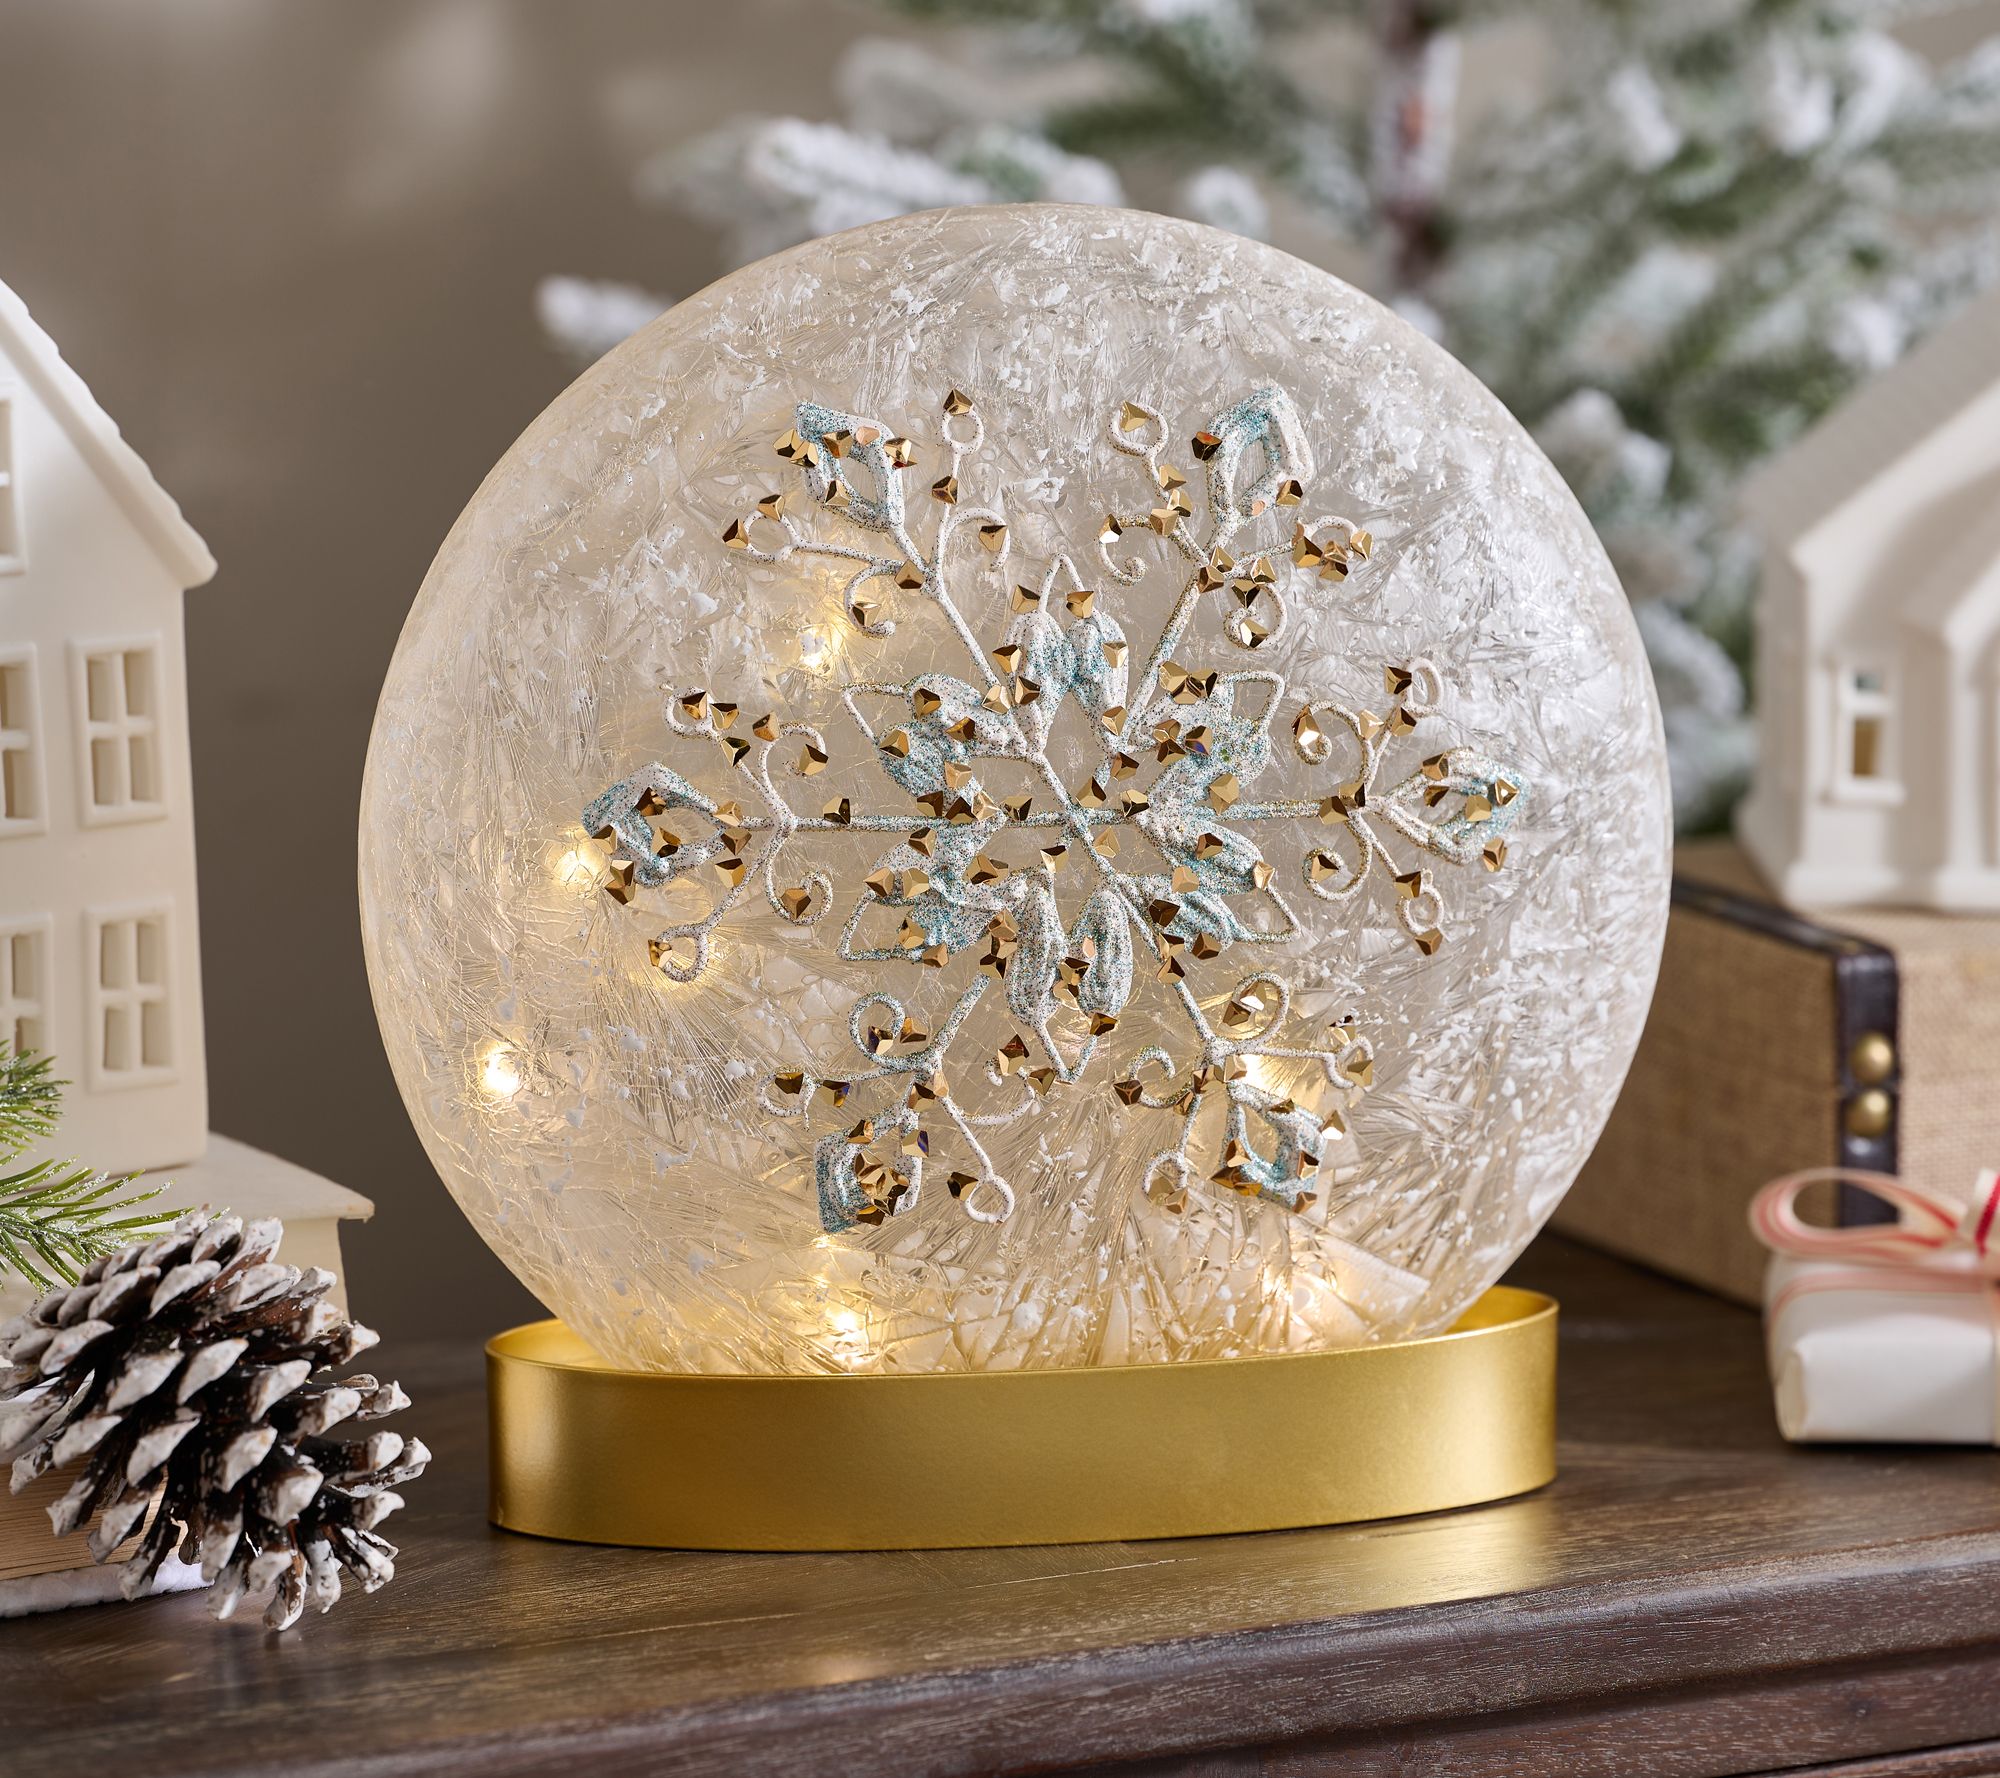 Merri Mac Kits Holiday Shopping Purse Ornaments Christmas Kits - Brand New